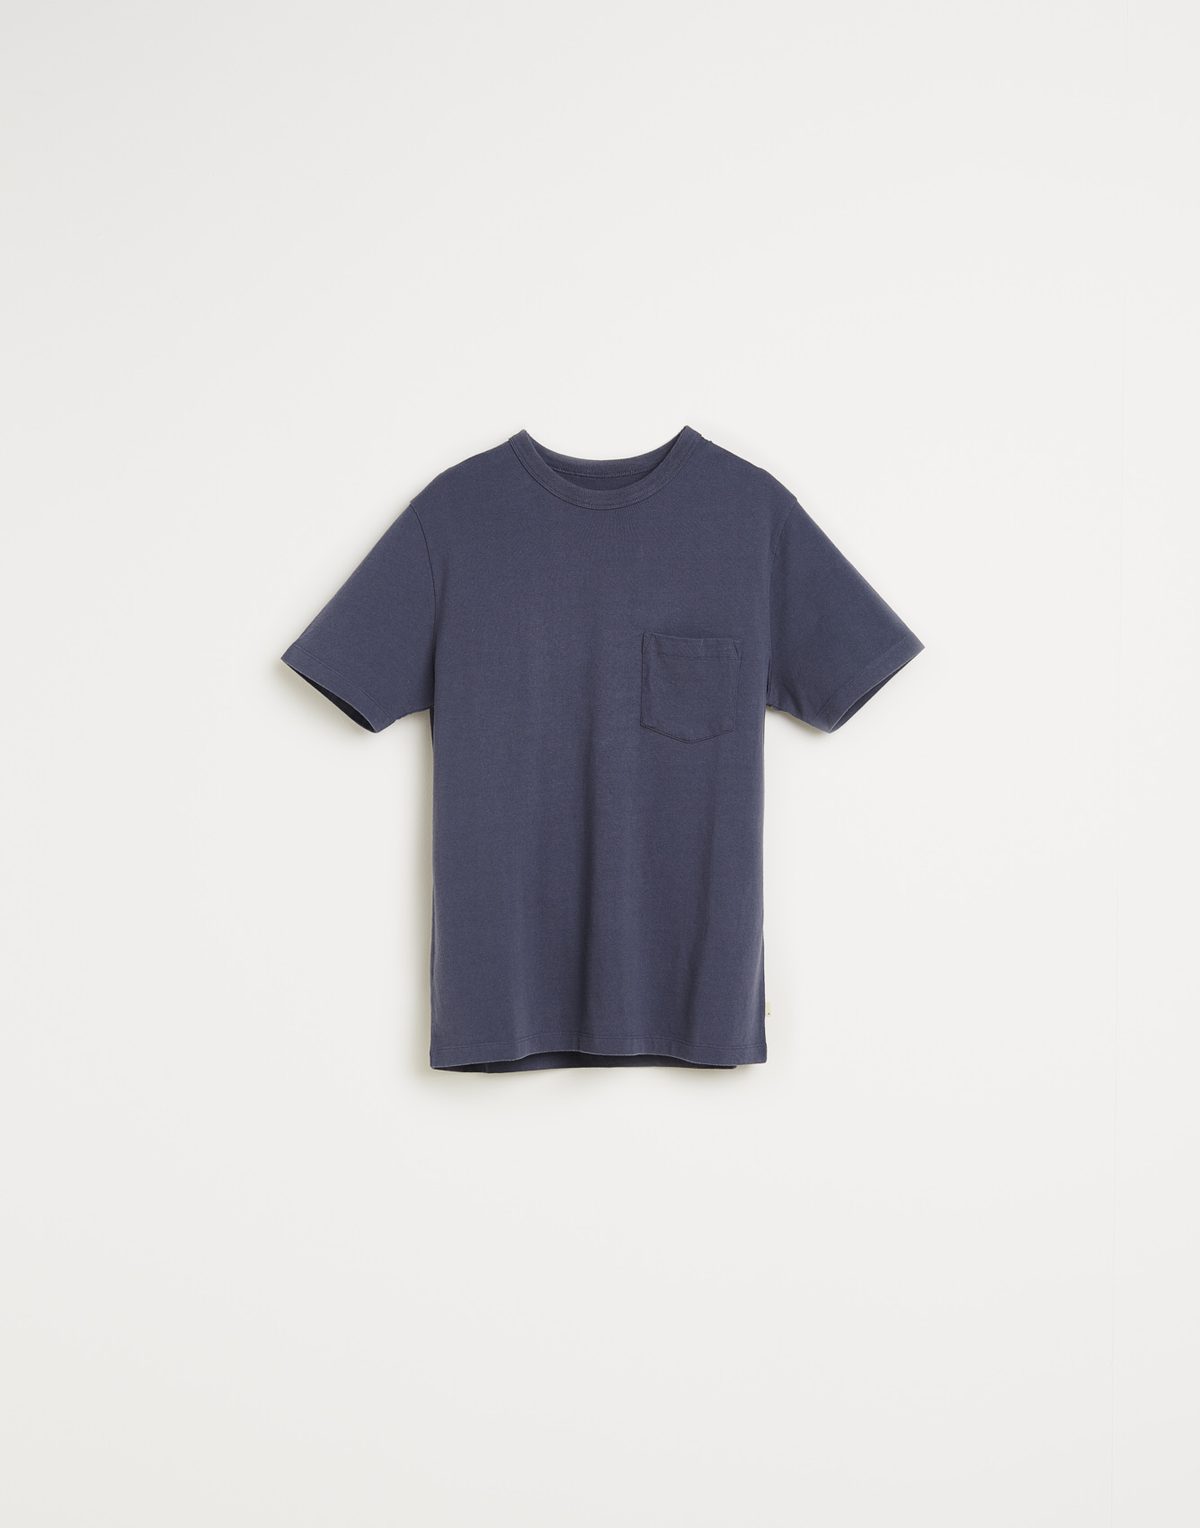 Bellerose Vinzo T-shirt (Blue nights)